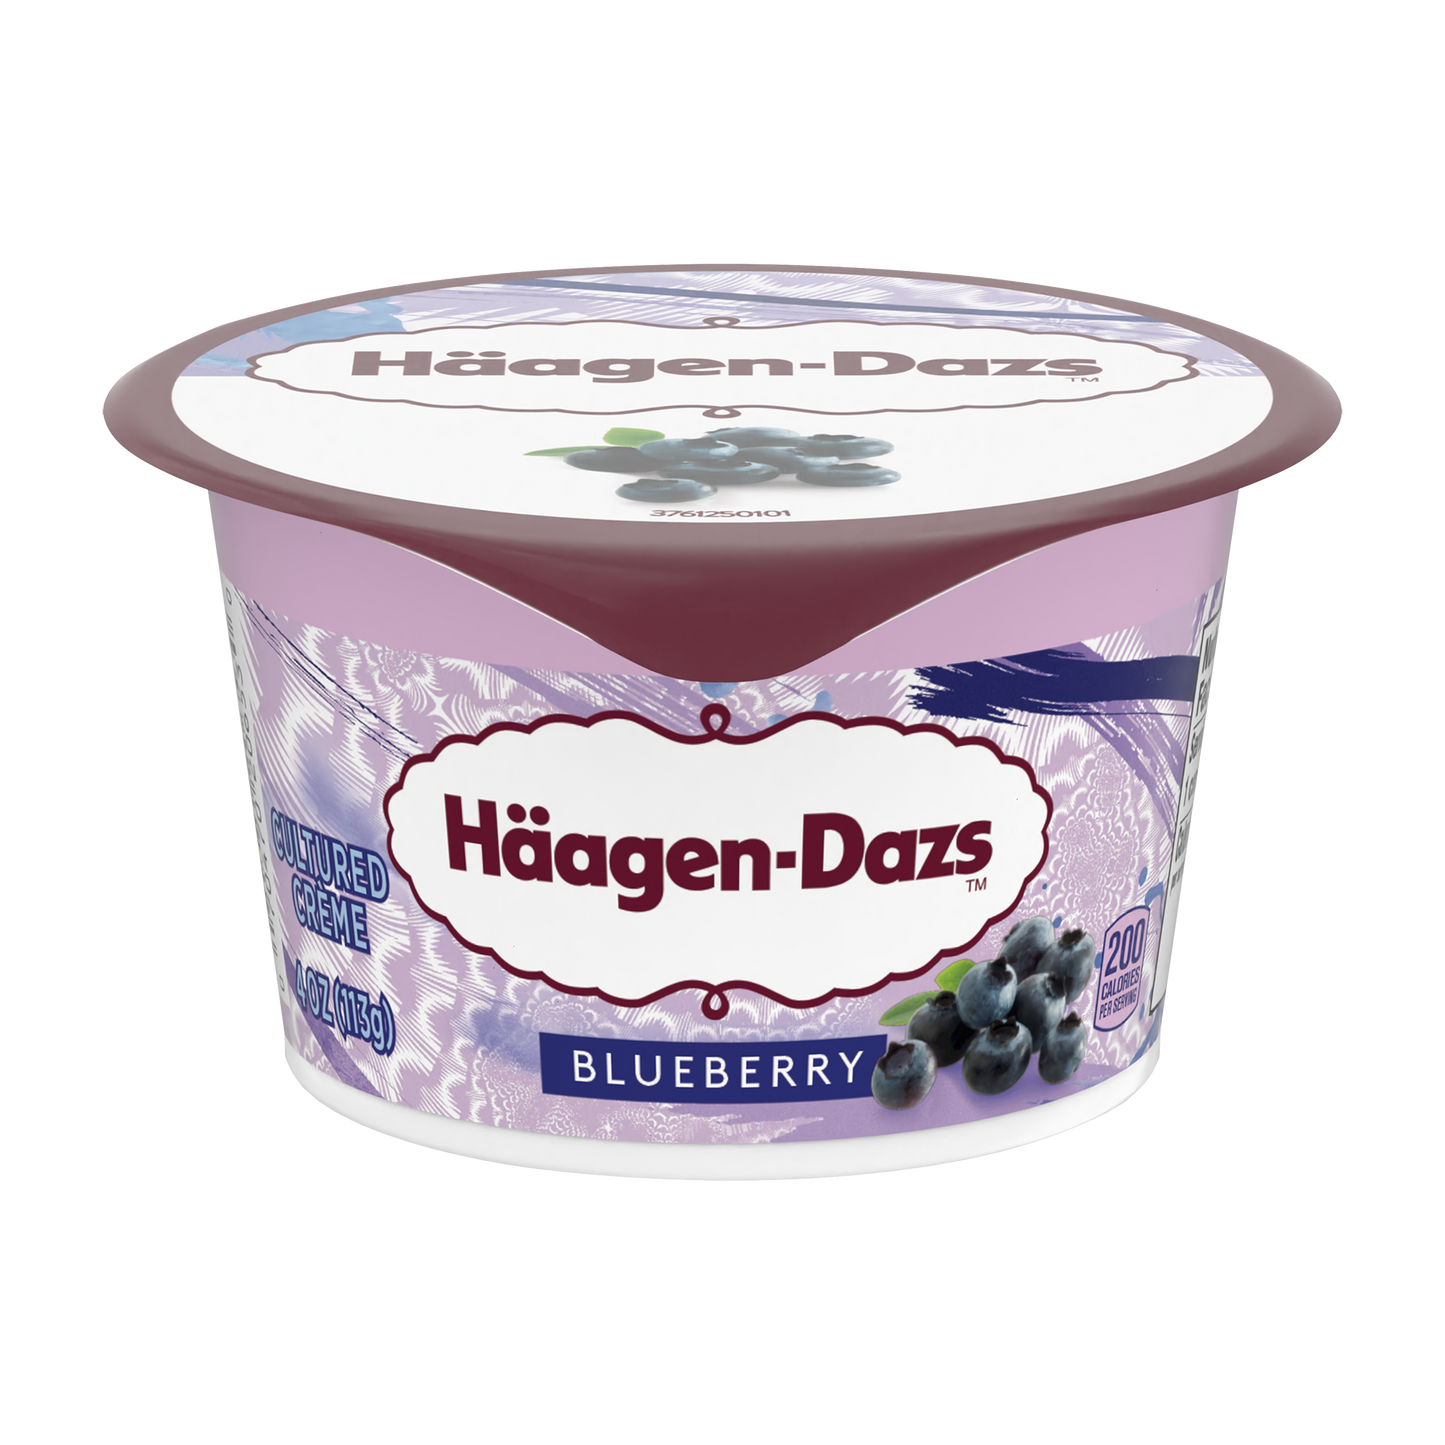 Haagen Dazs Blueberry Yogurt, Front of Pack